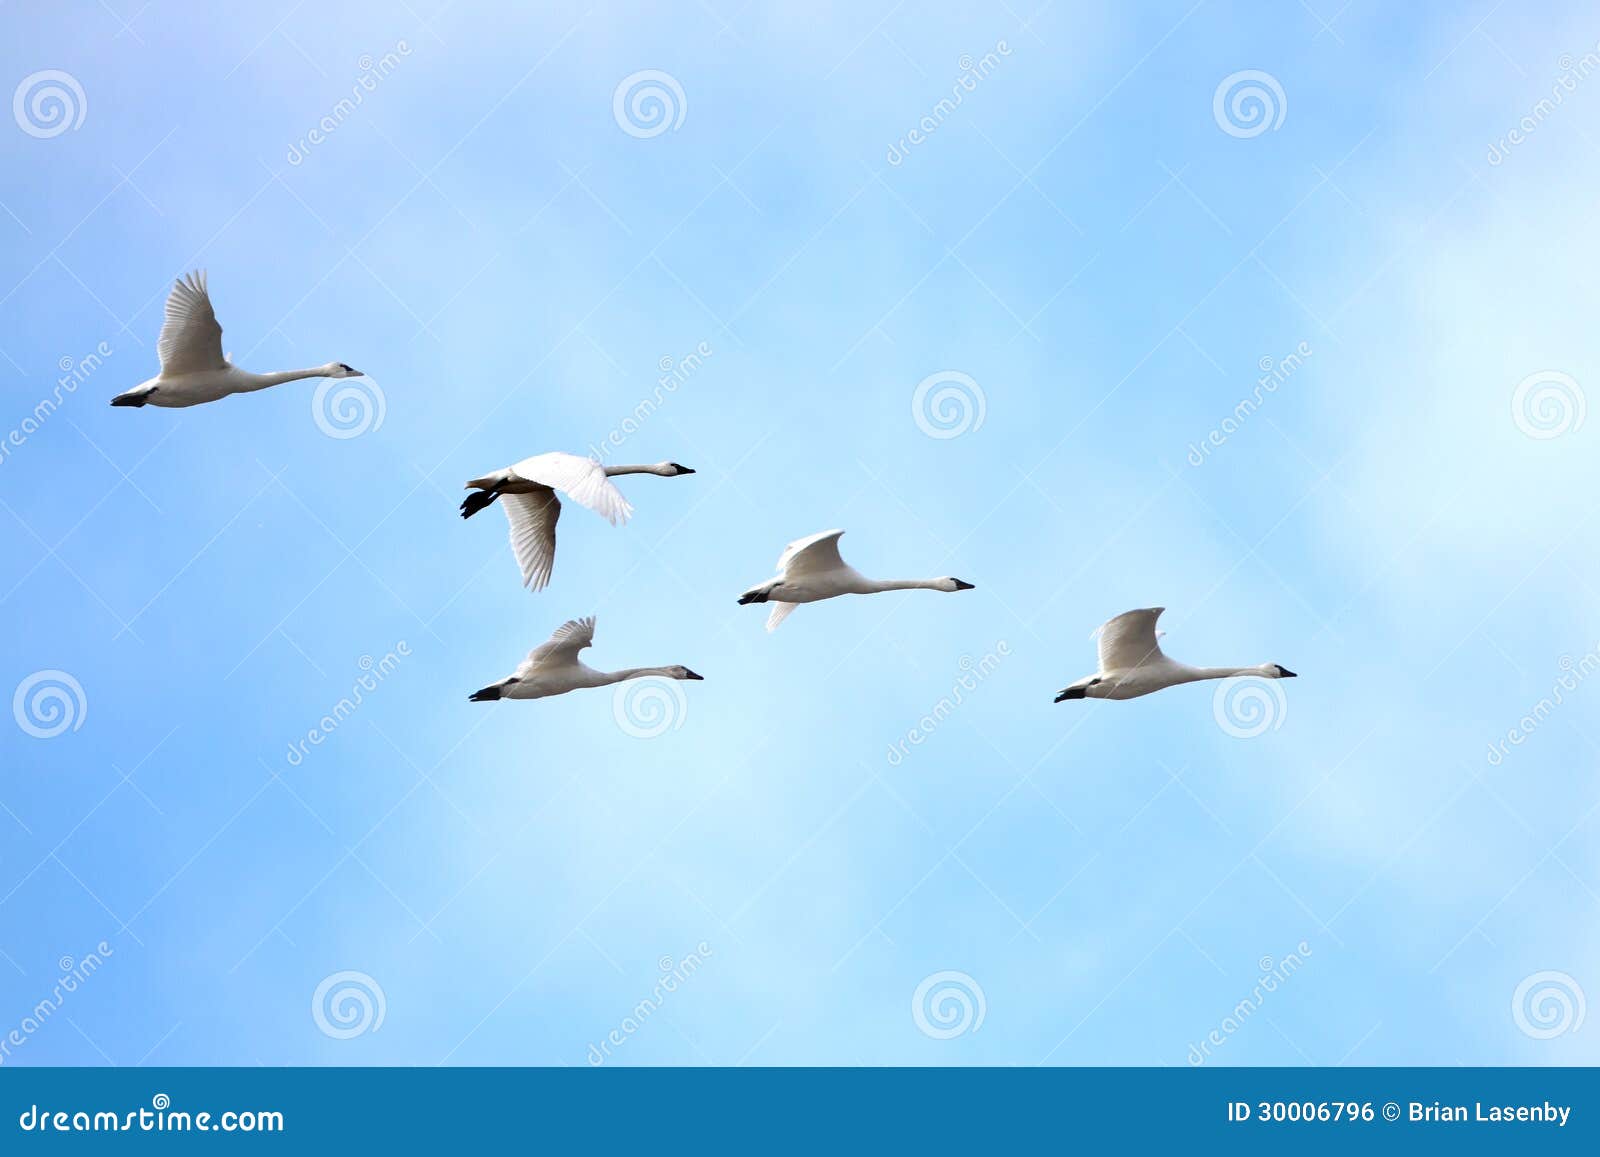 tundra swans (cygnus columbianus) migrating in spring